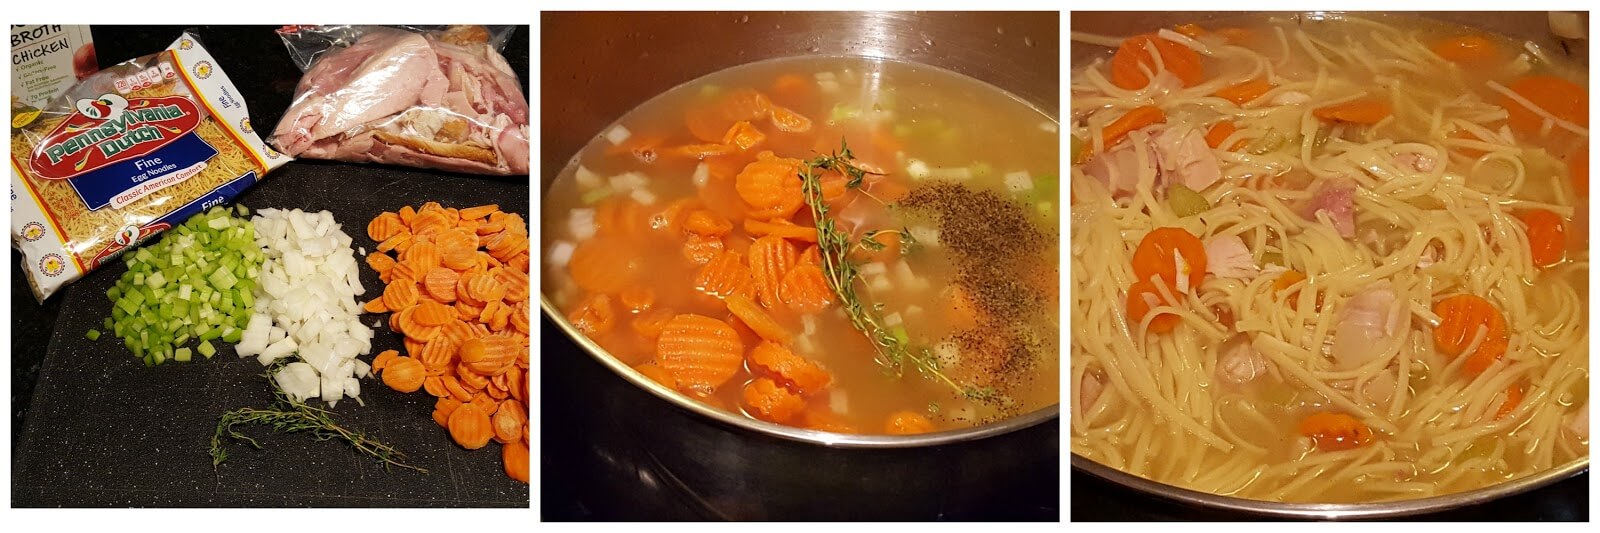 Leftover turkey noodle soup